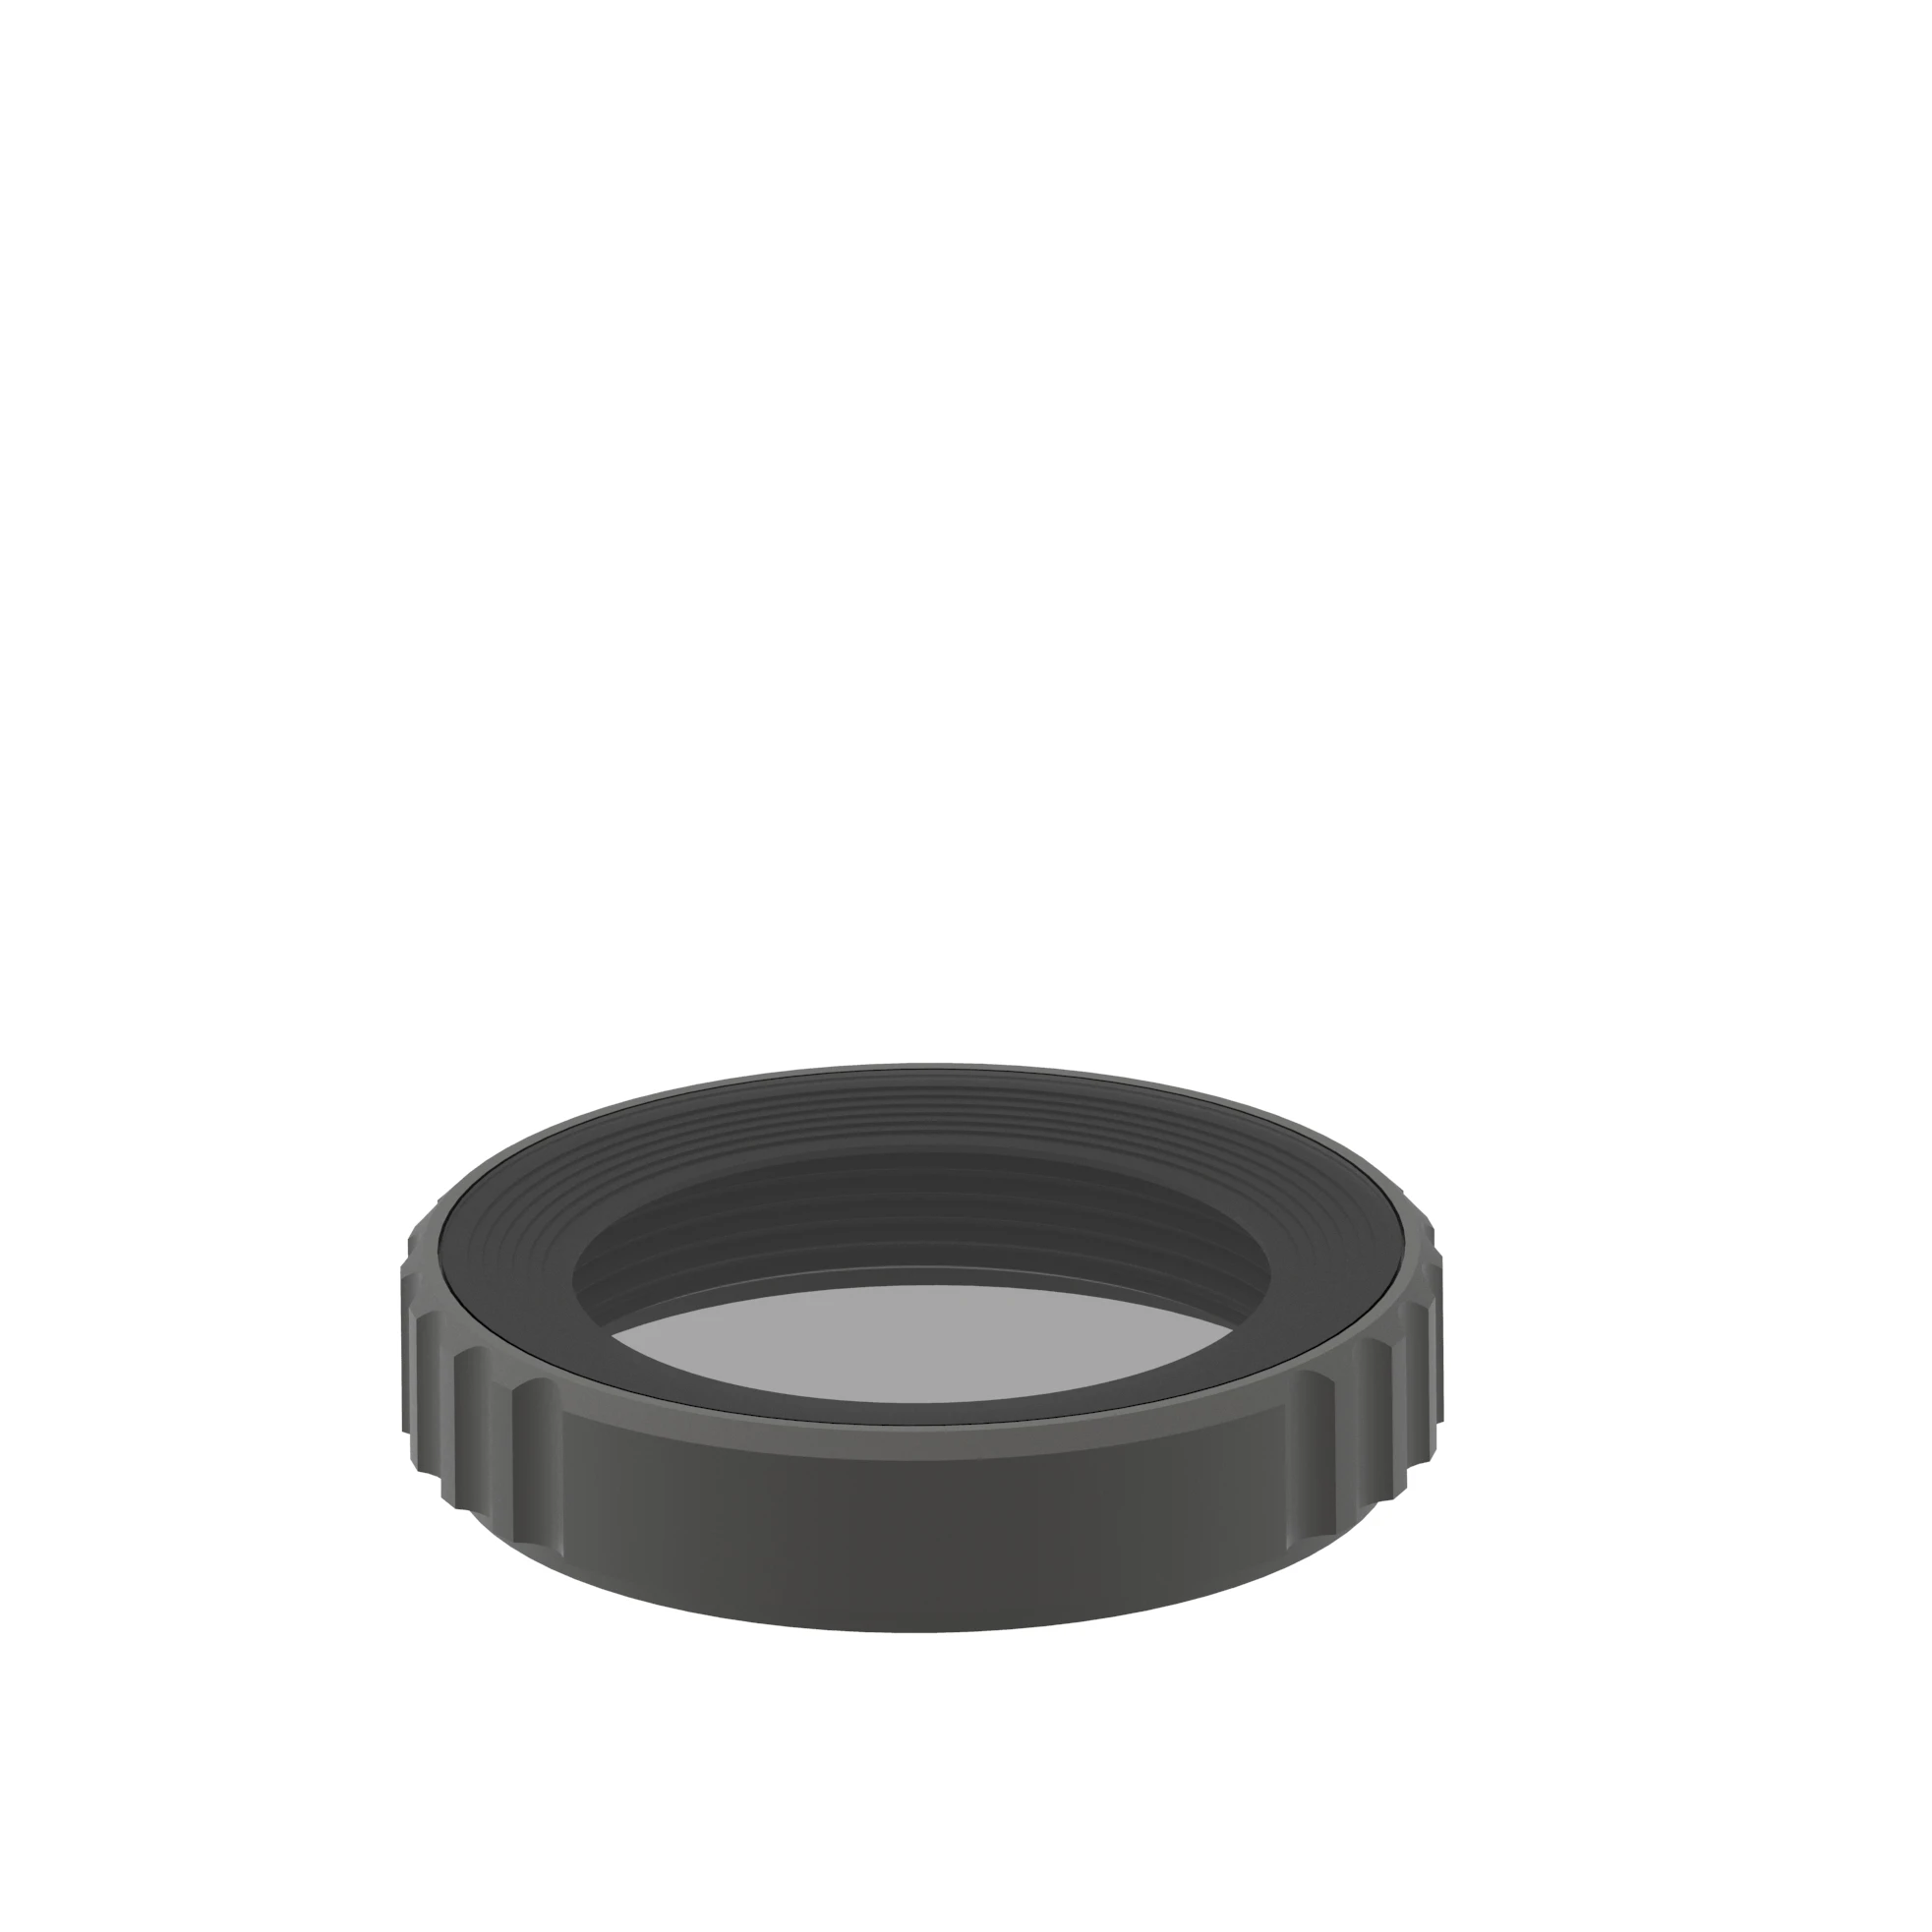 
DJI osmo action camera MRC UV filter  (62142410456)